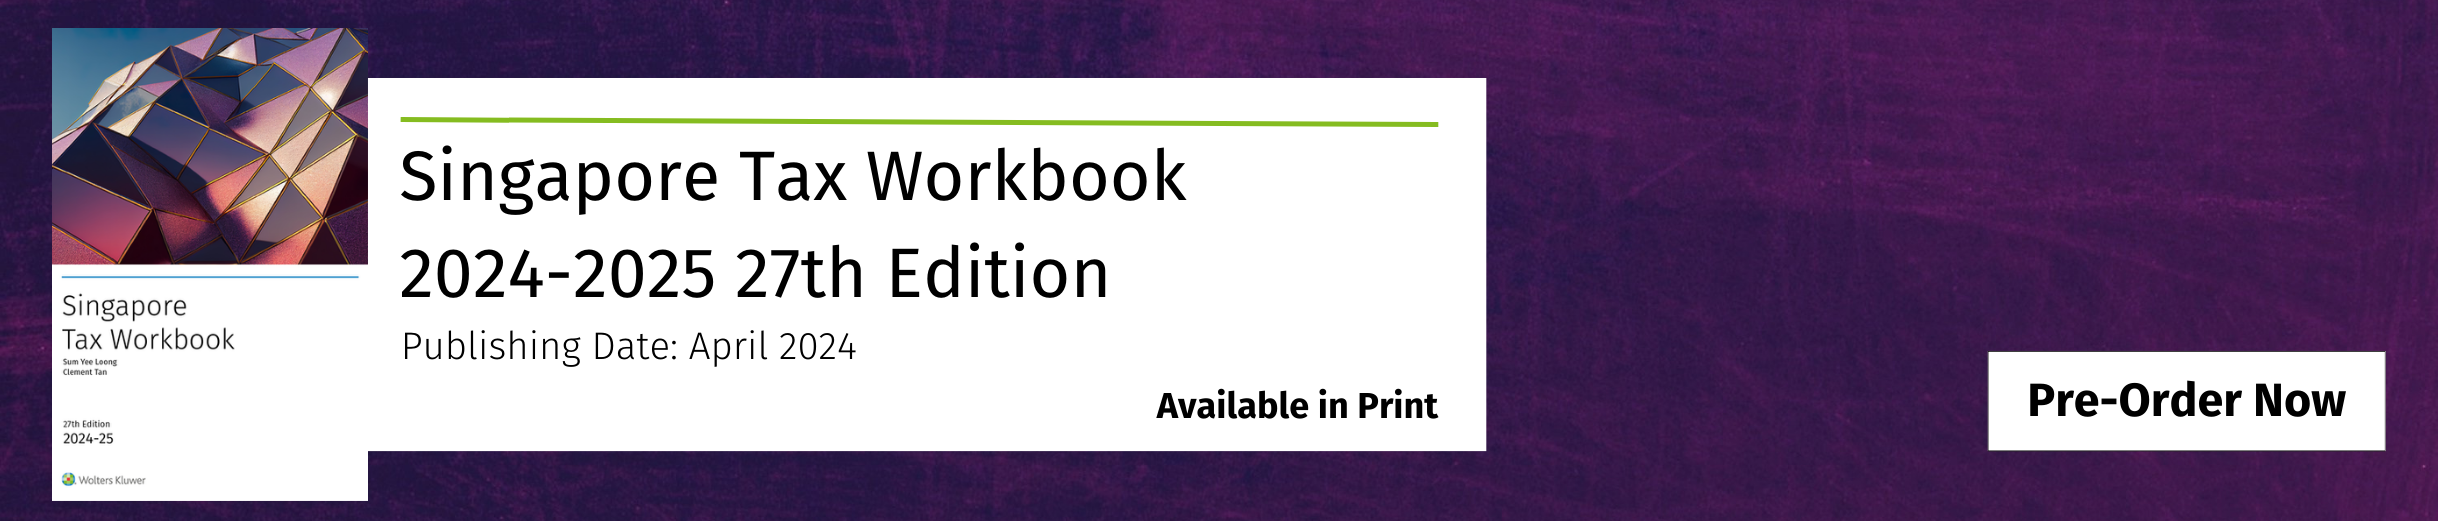 Singapore Tax Workbook 2024-2025 27th Edition